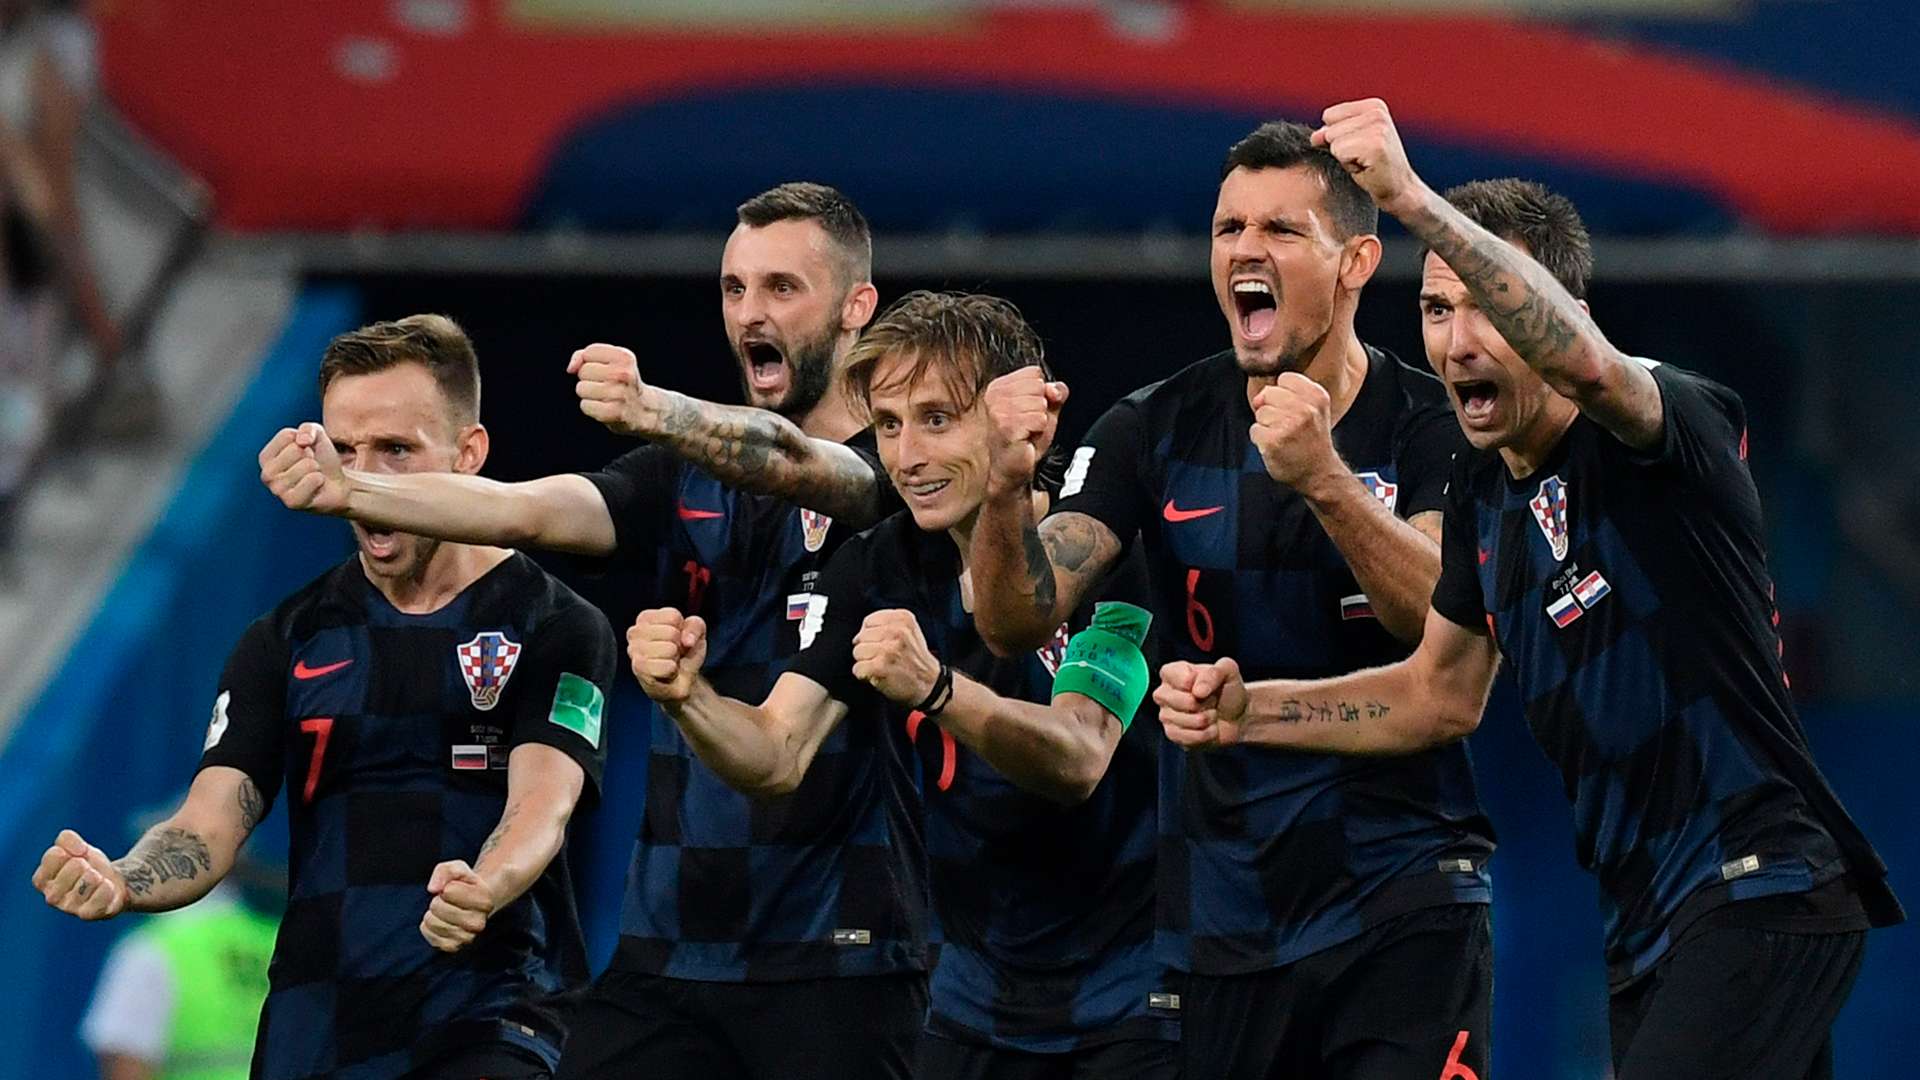 Croatia World Cup 2018